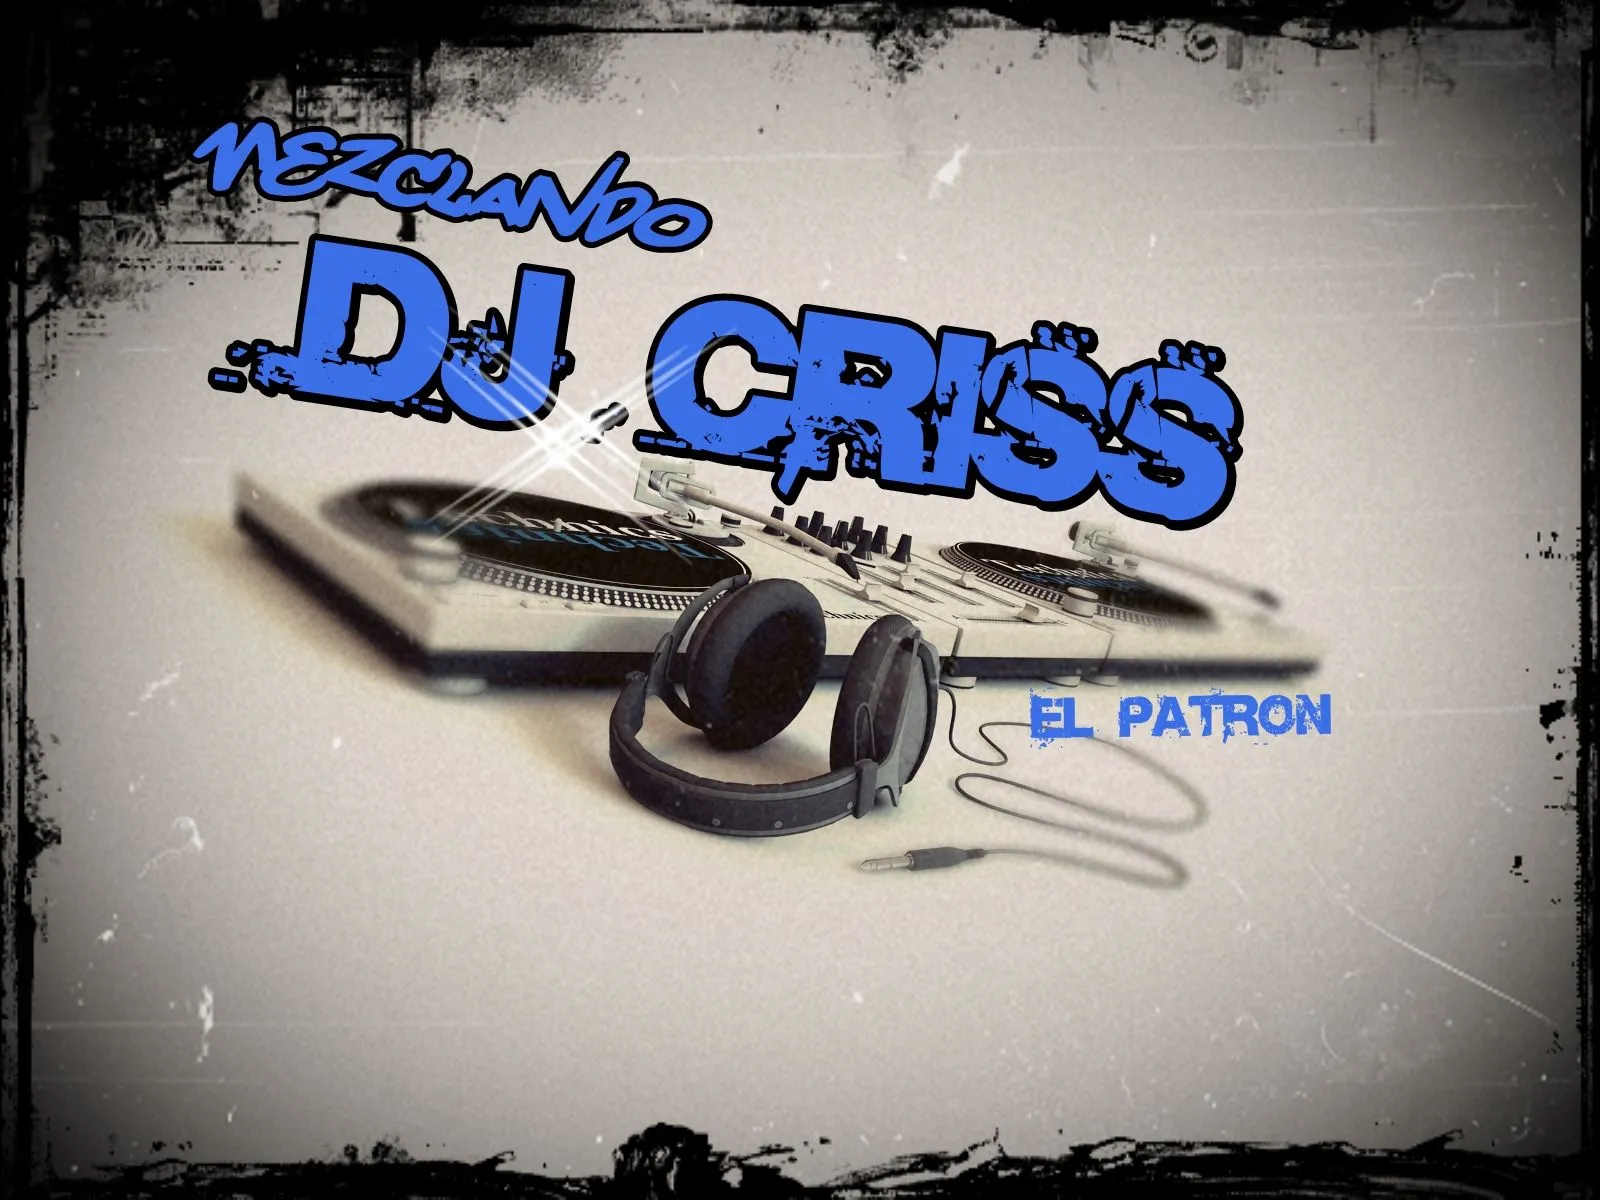 DJ CRISS EL PATRON: Nuevos Logos De Dj Criss